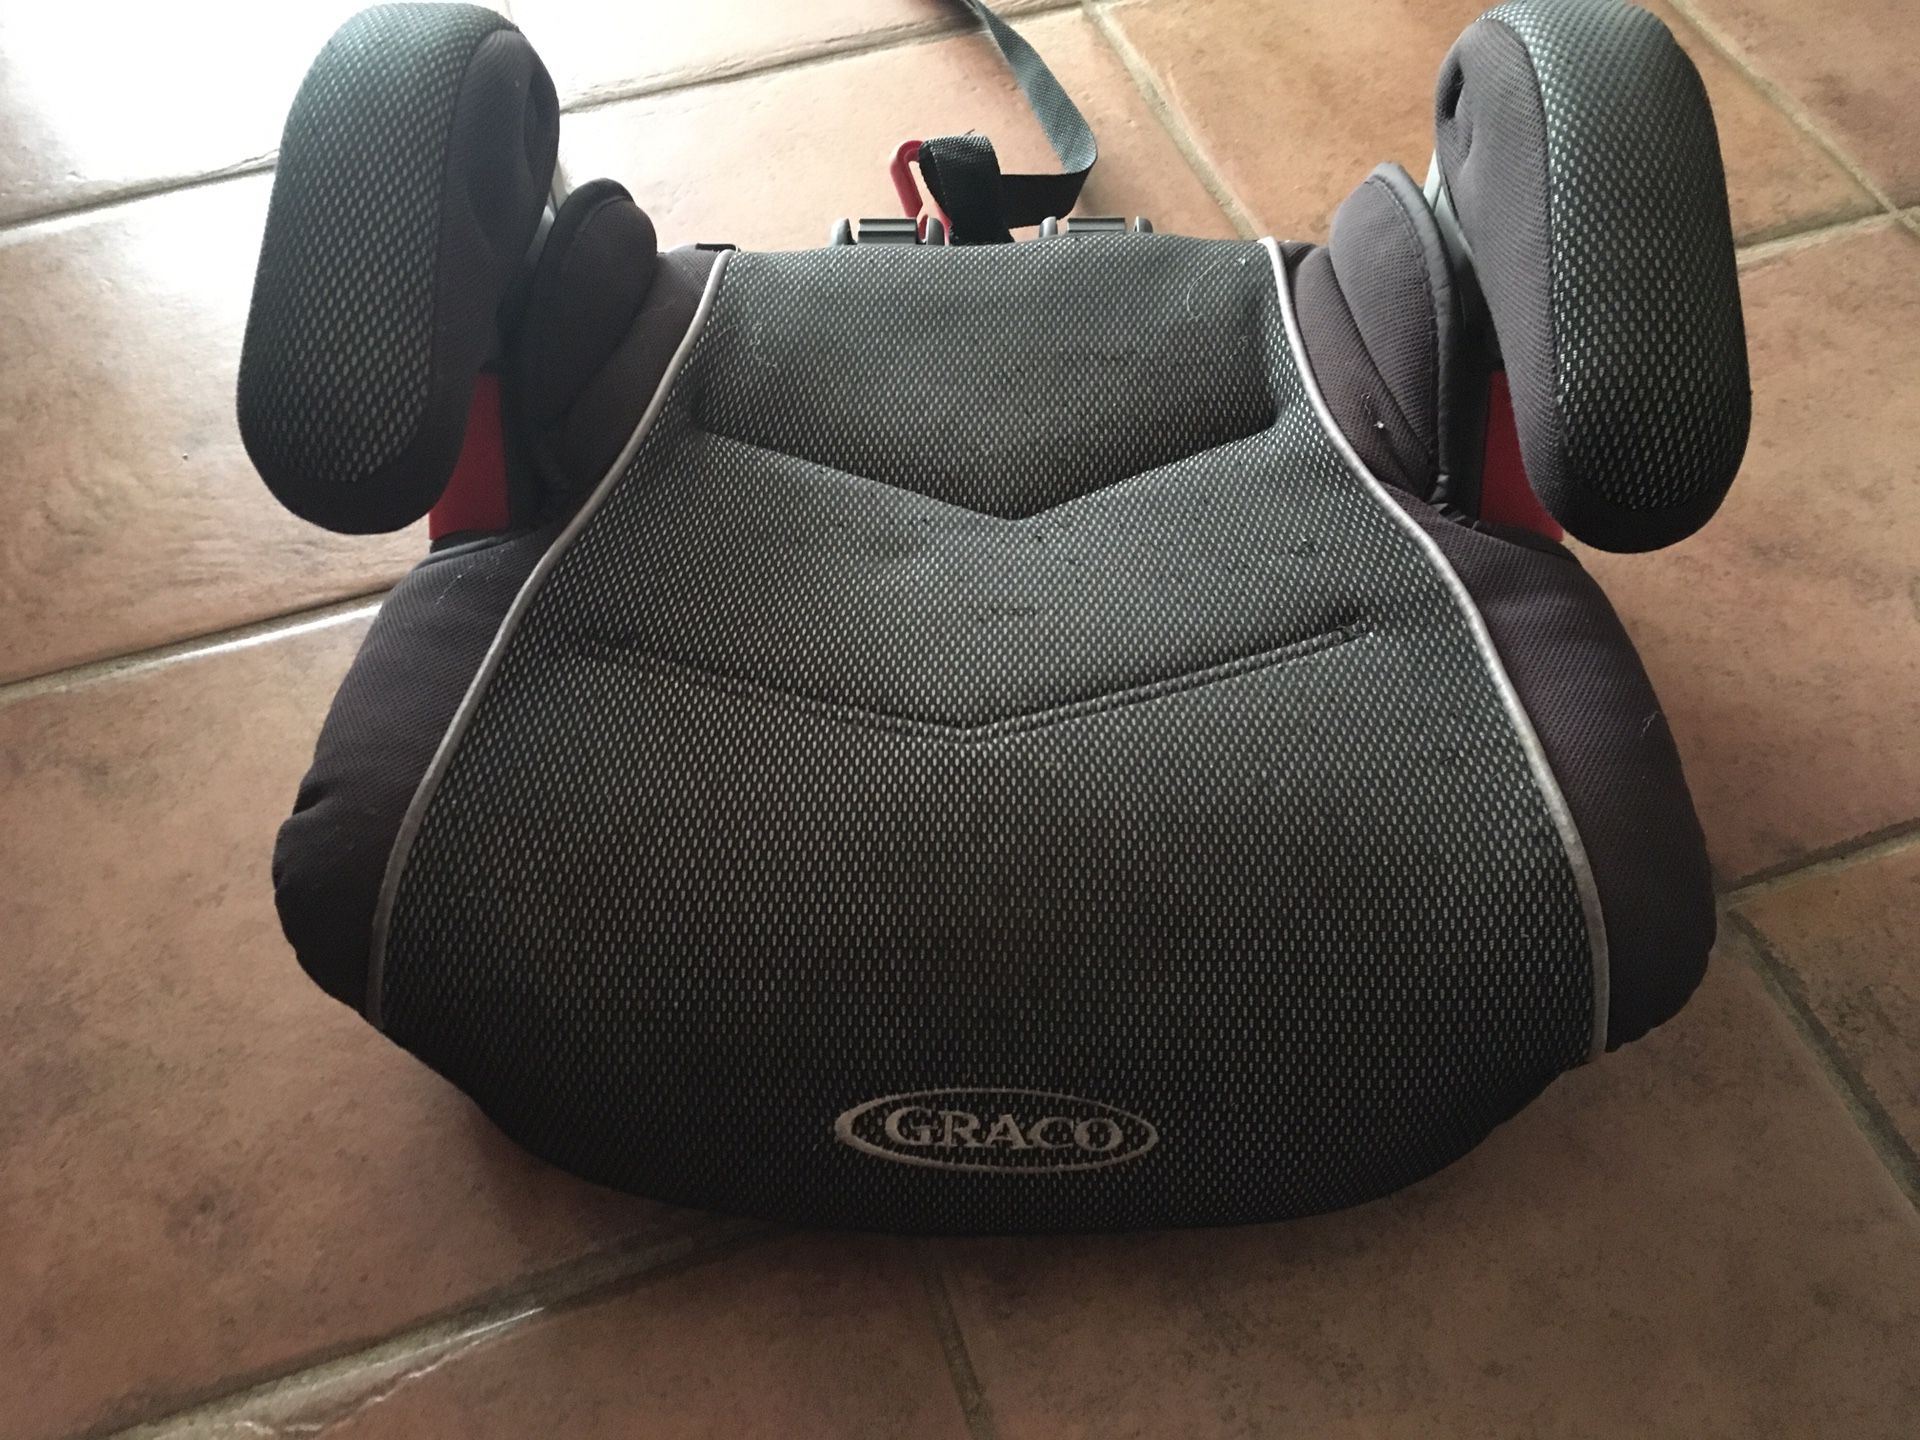 Grayco booster seat